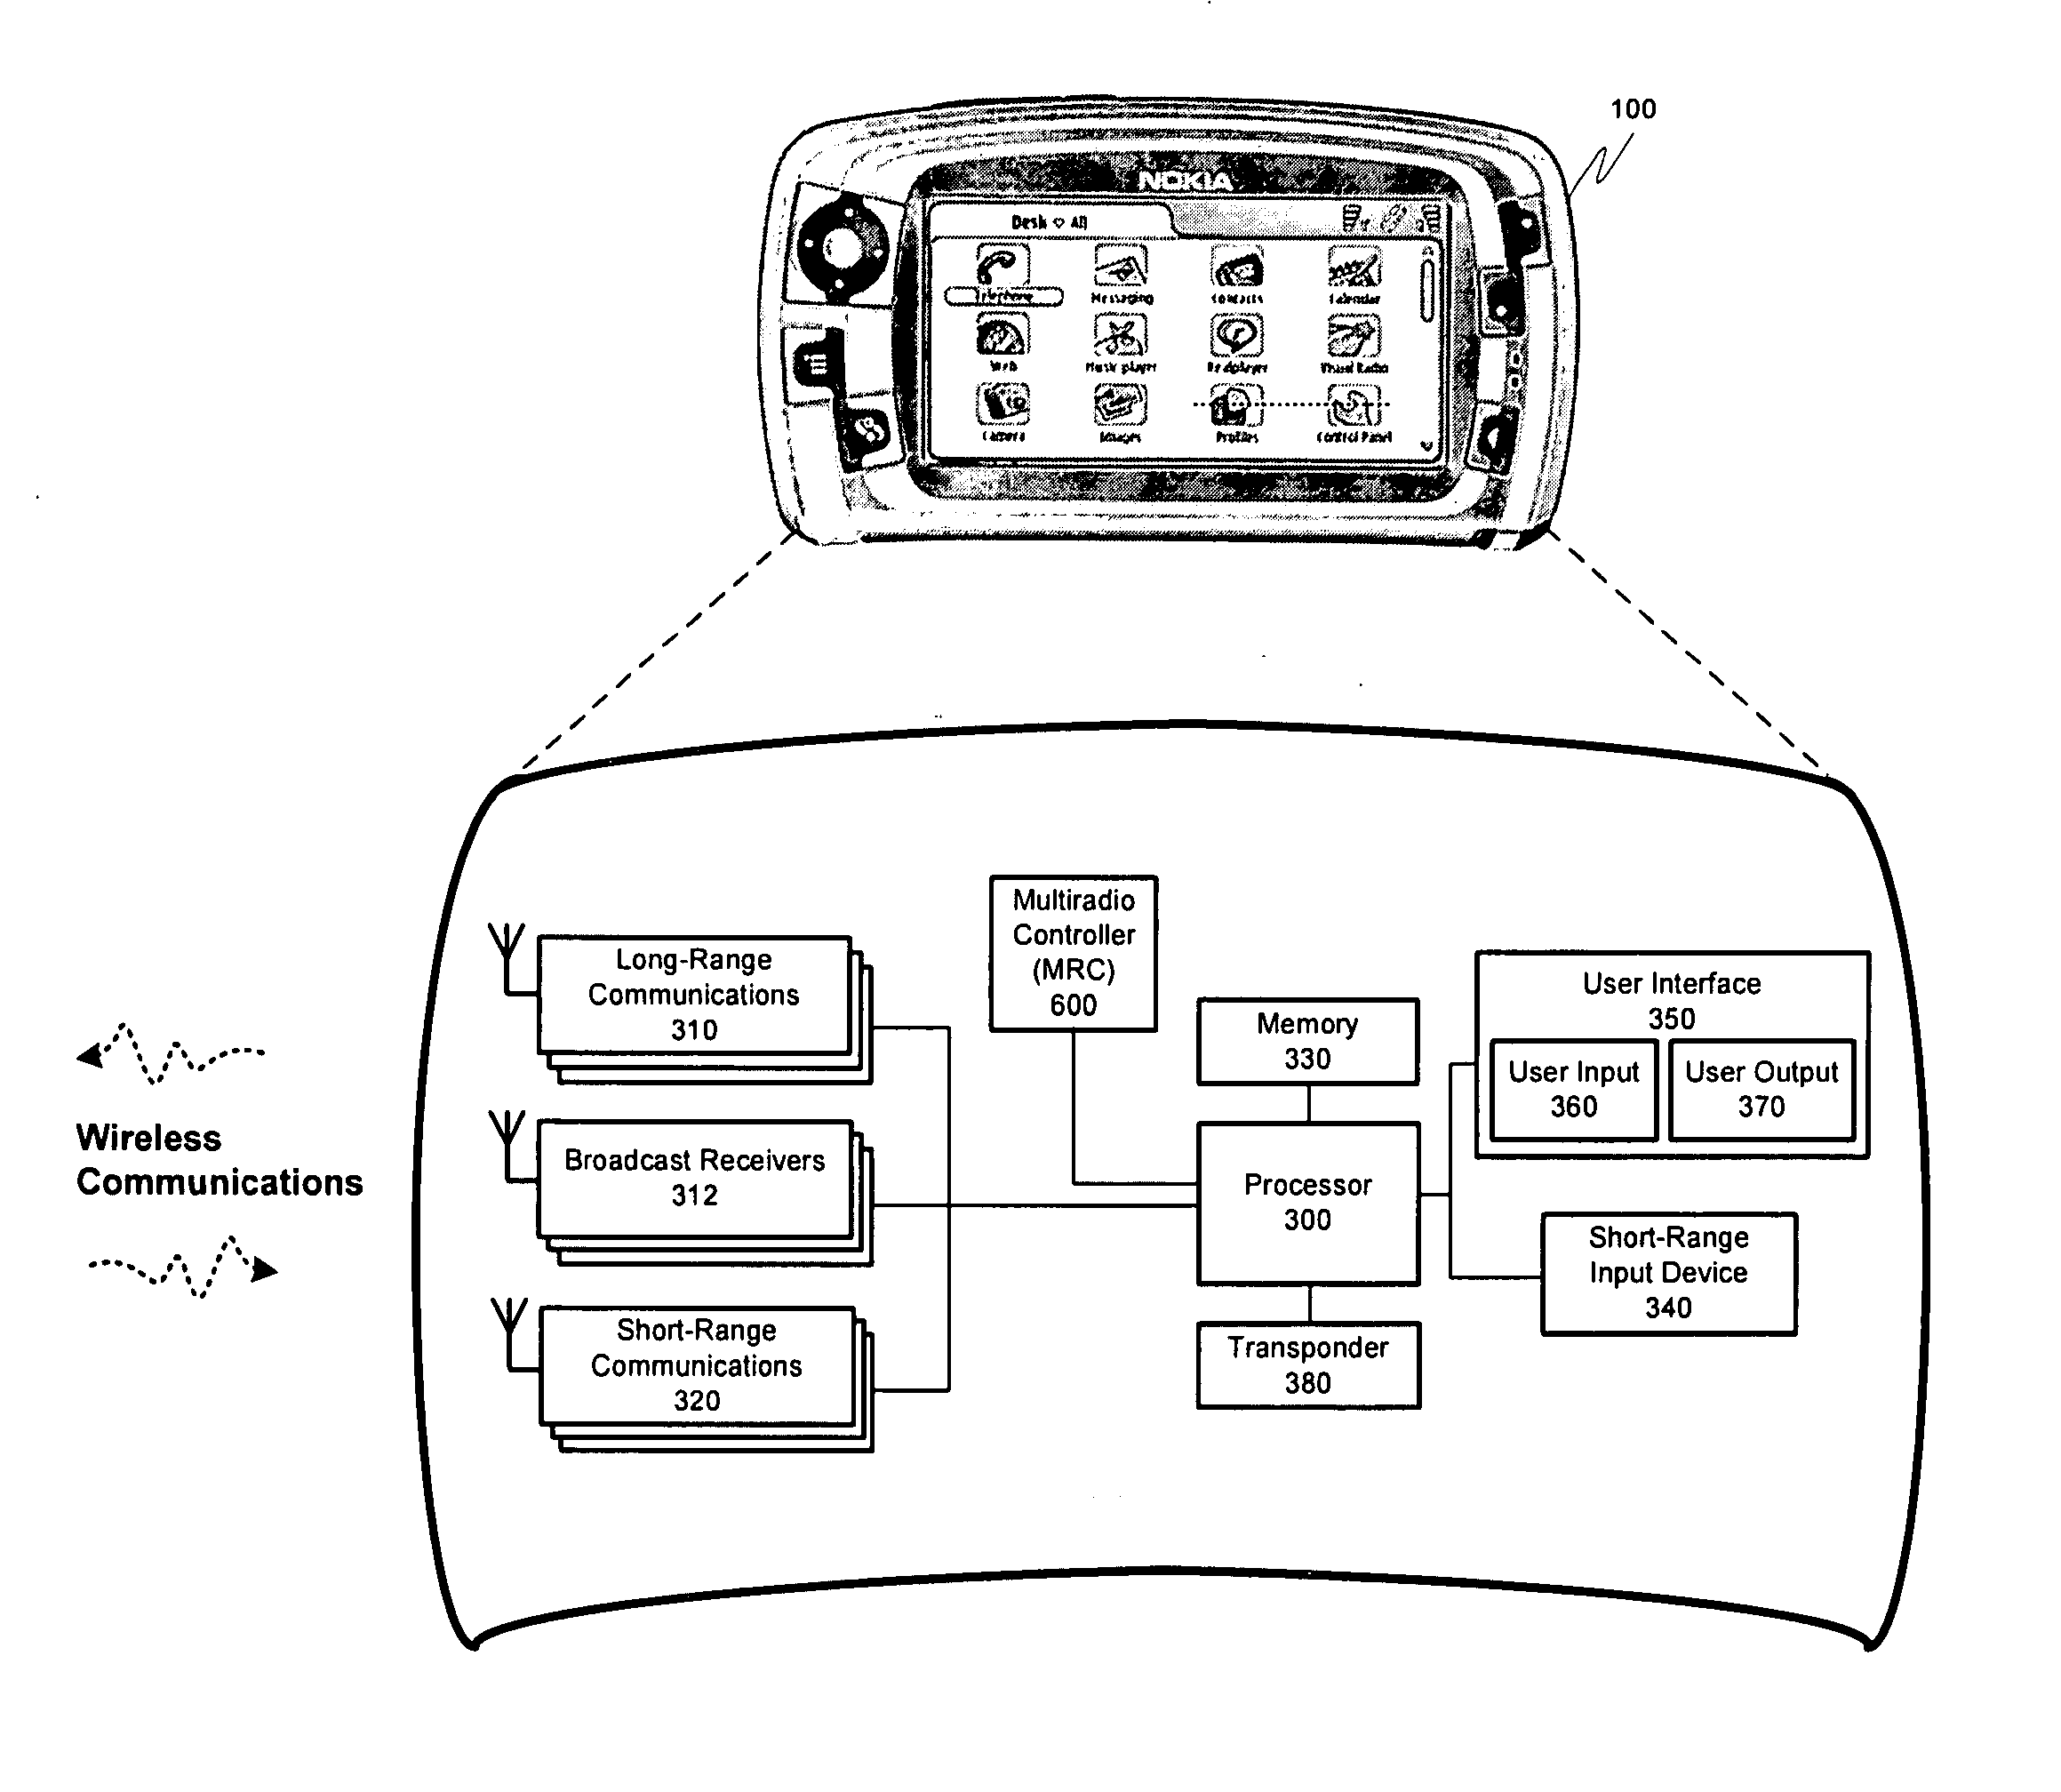 Multiradio control interface